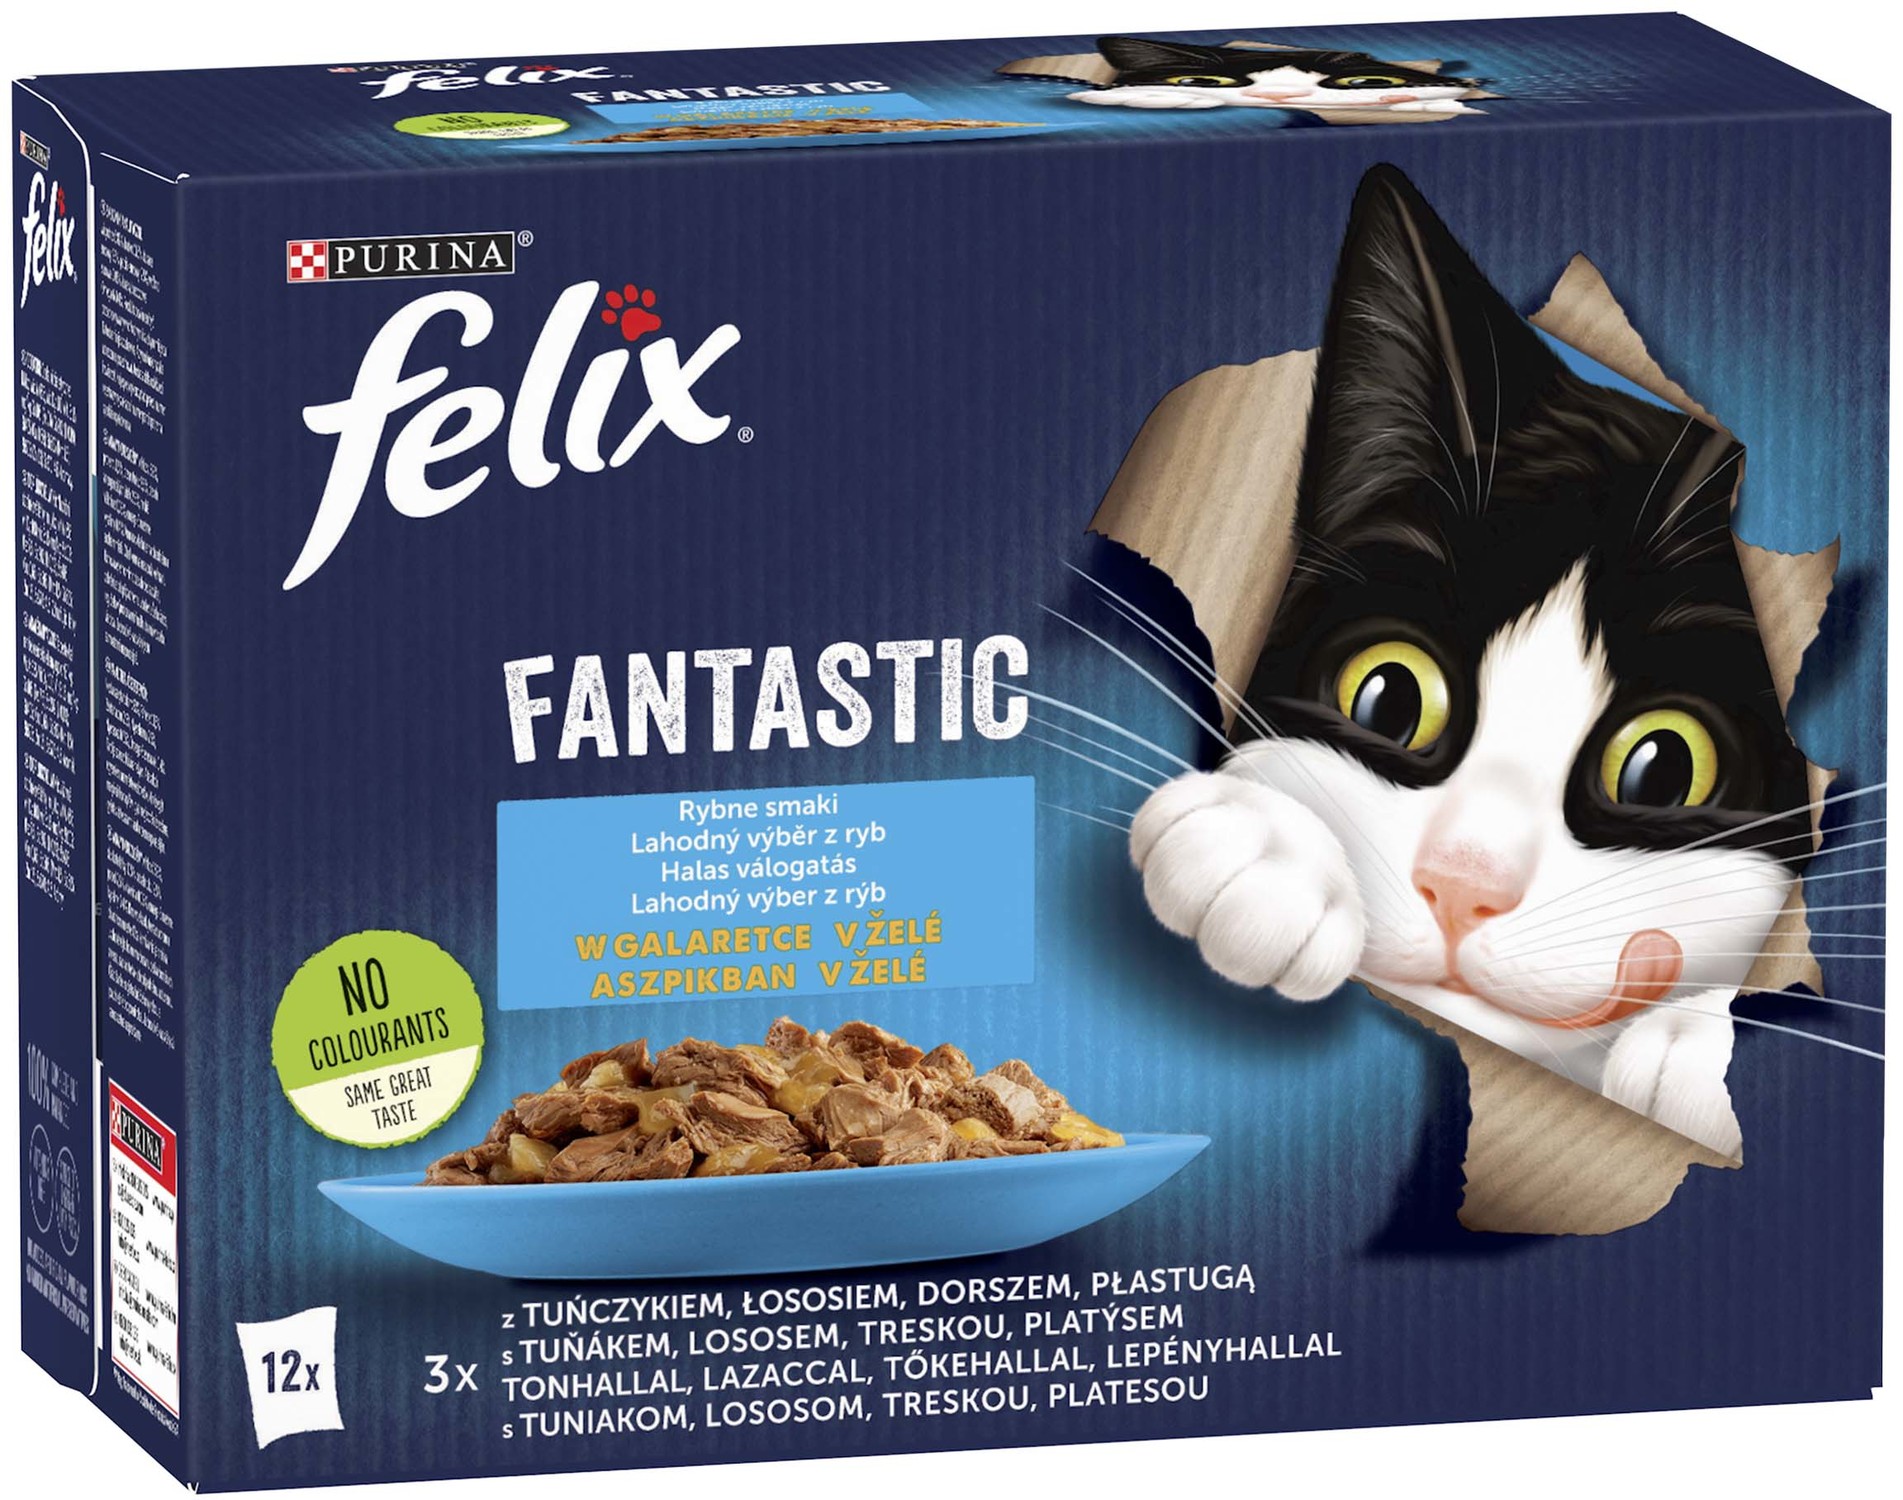 Felix Fantastic varietate cu pește în aspic - Multipack (12 x 85 g)